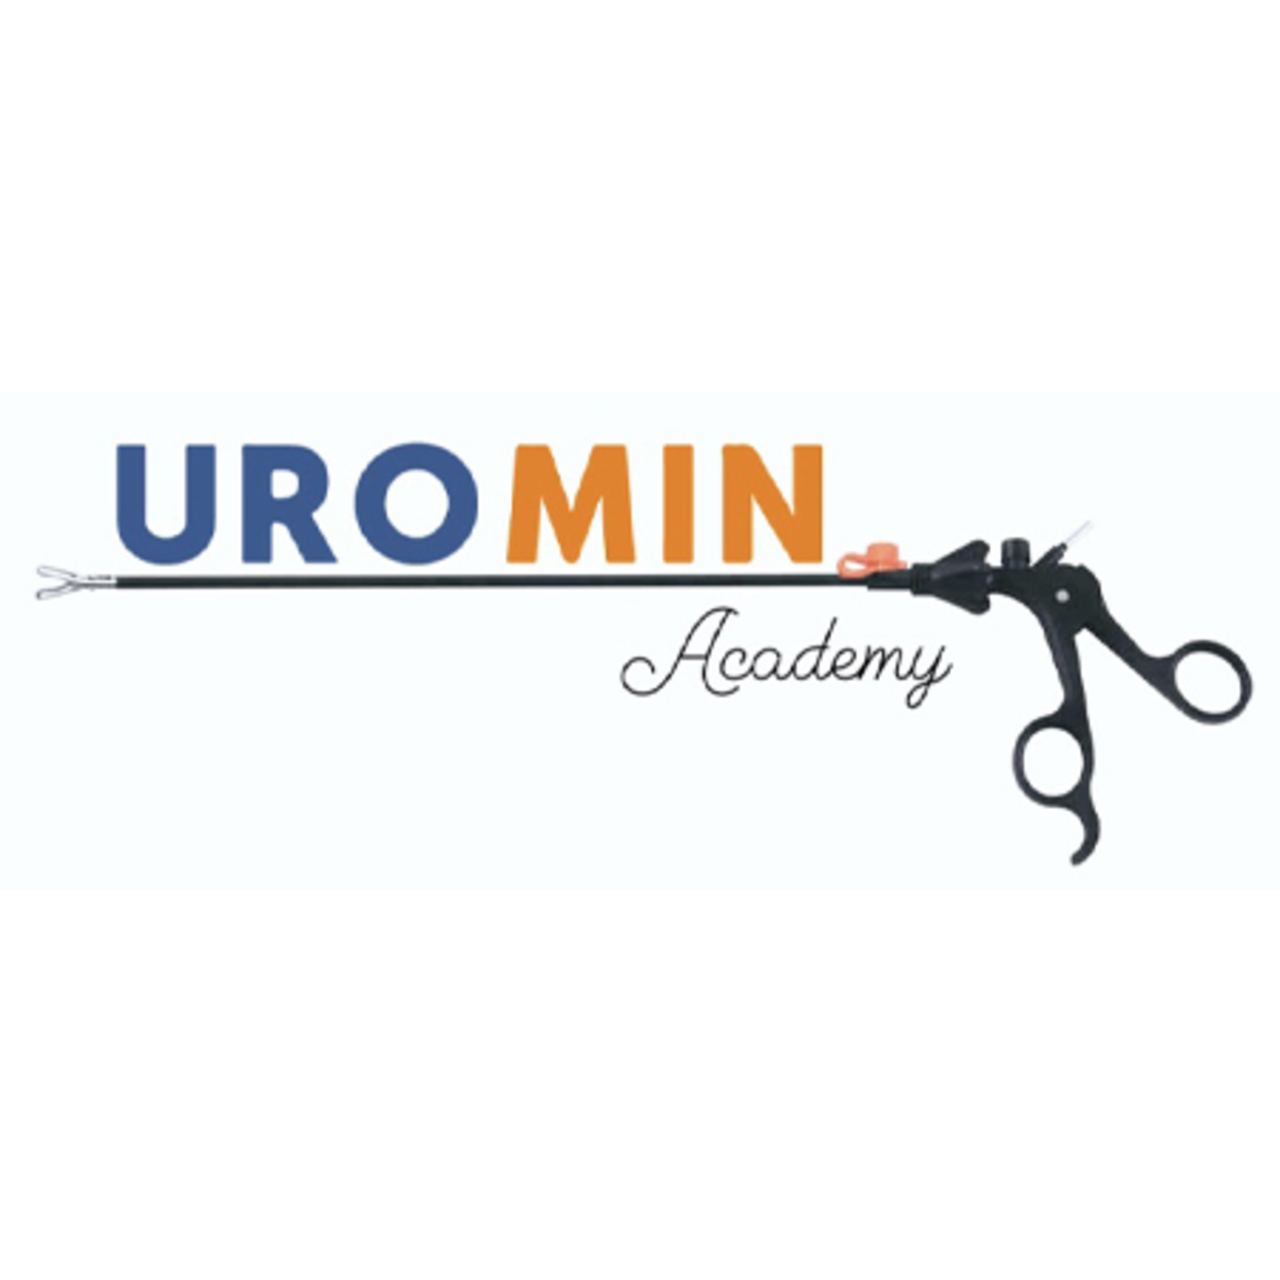 Uromin Academy